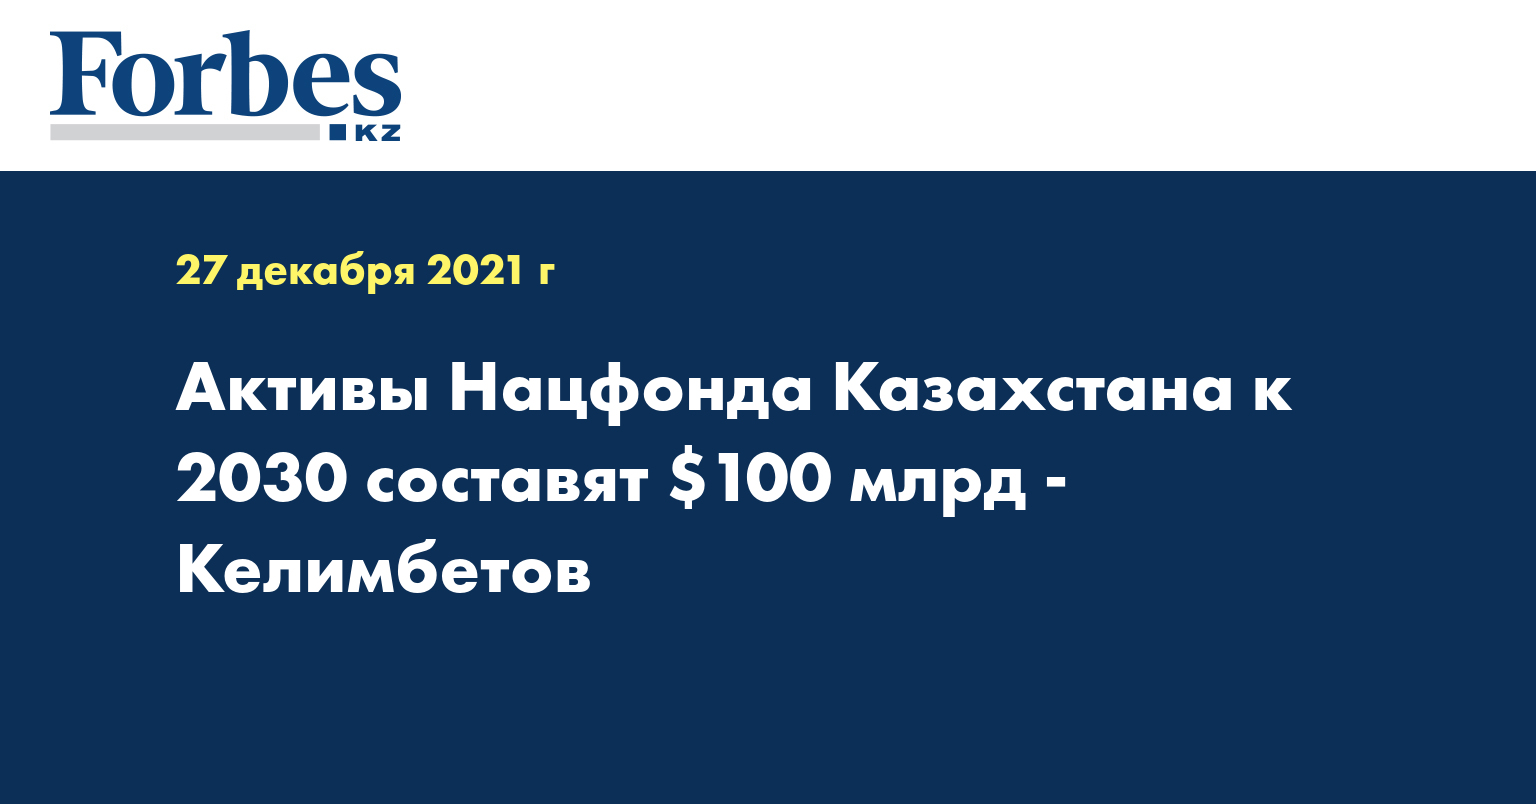 Активы Нацфонда Казахстана к 2030 составят $100 млрд - Келимбетов